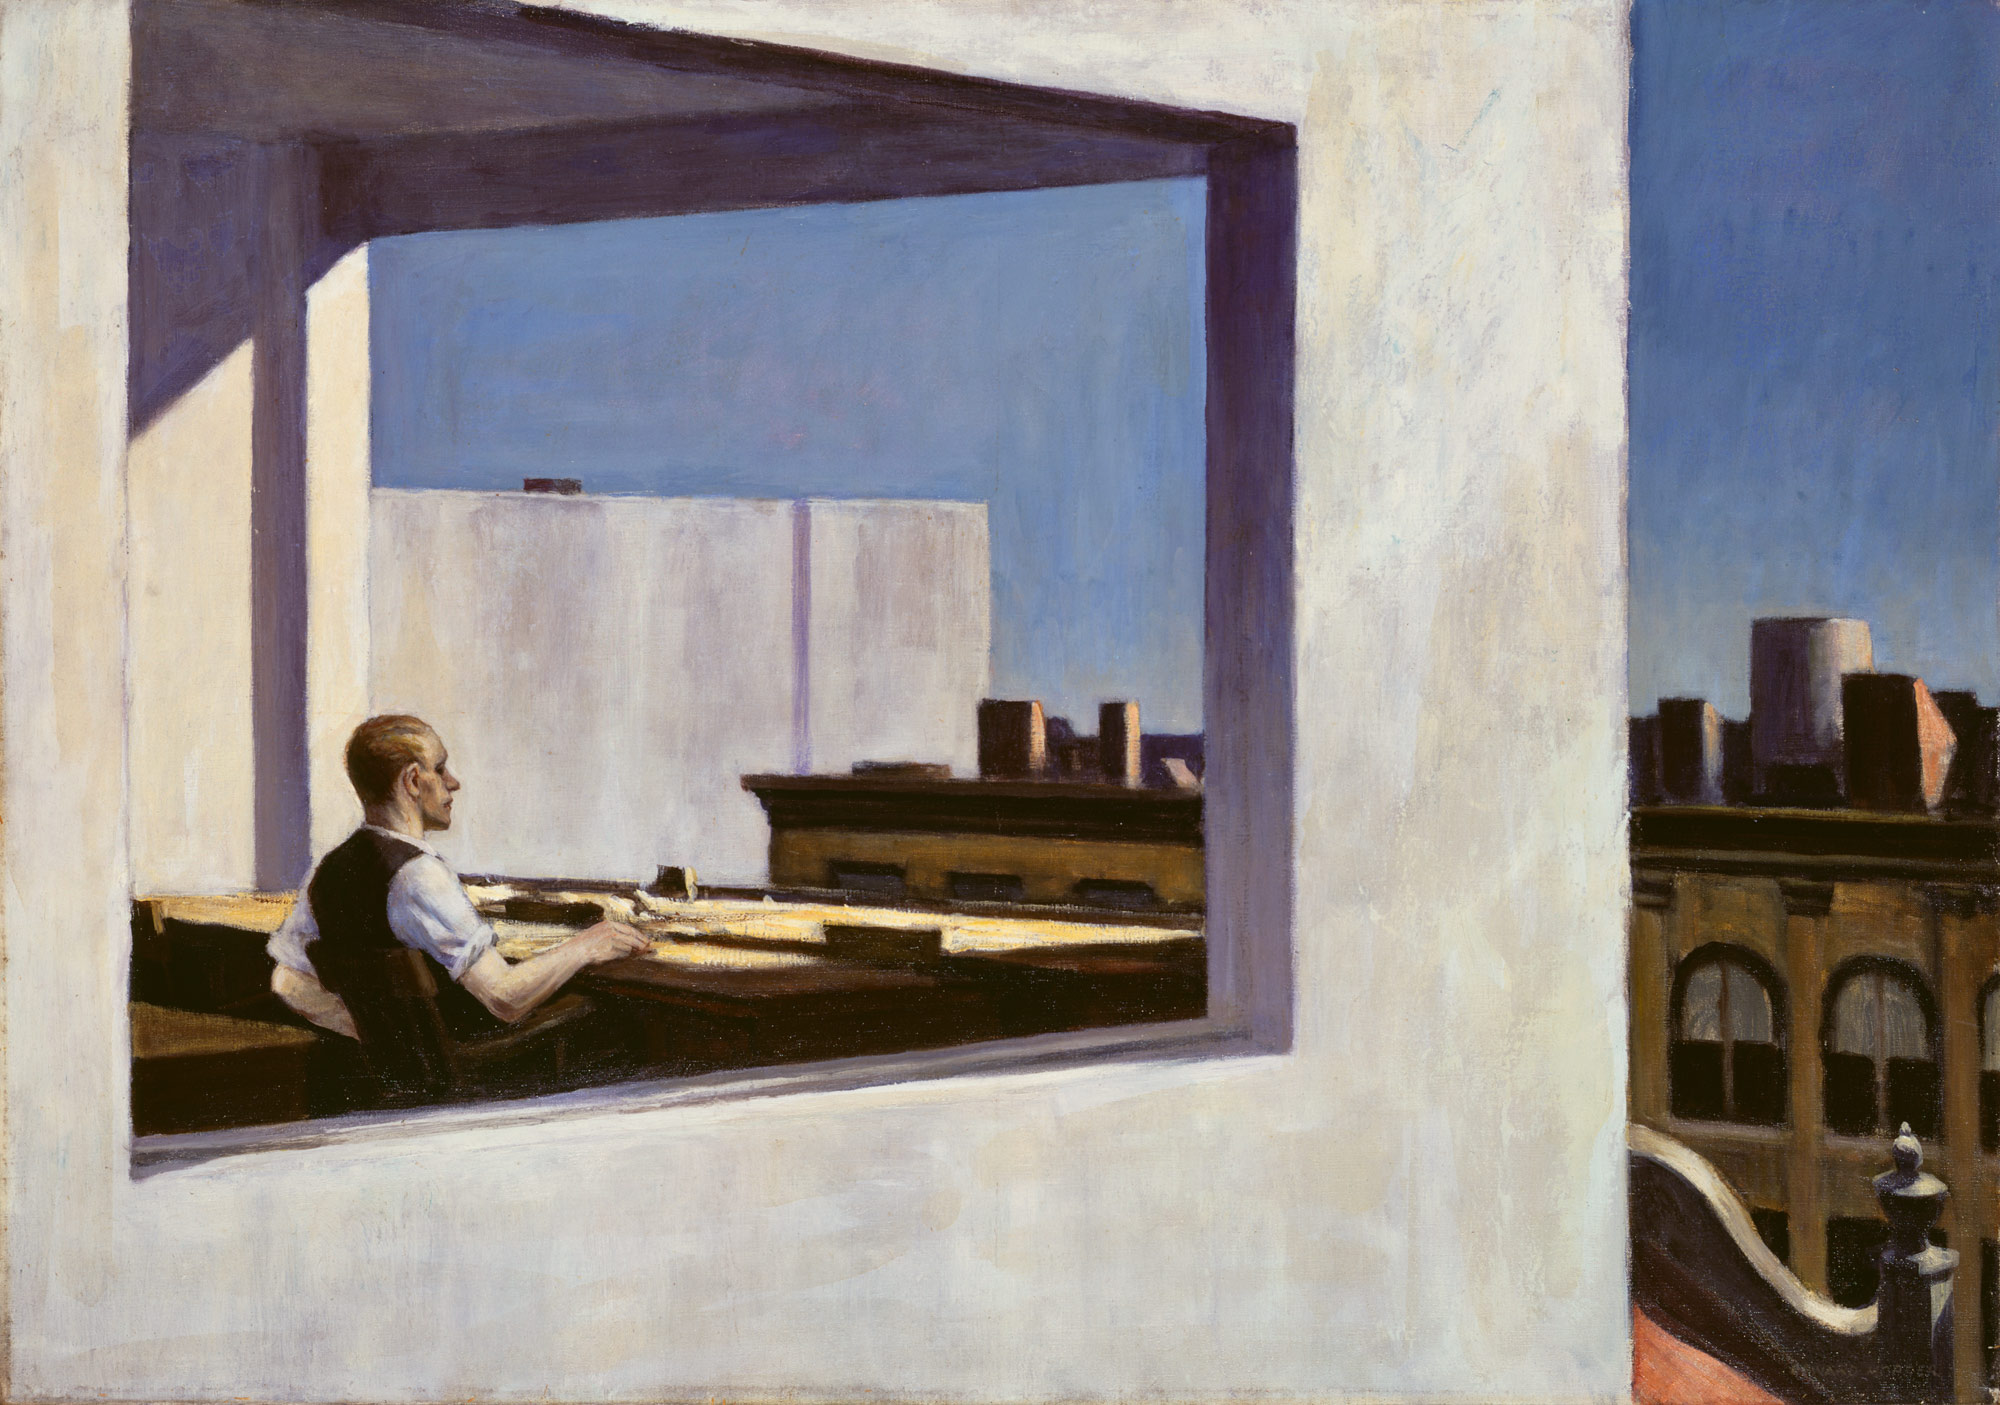 Edward Hopper: Office in a Small City